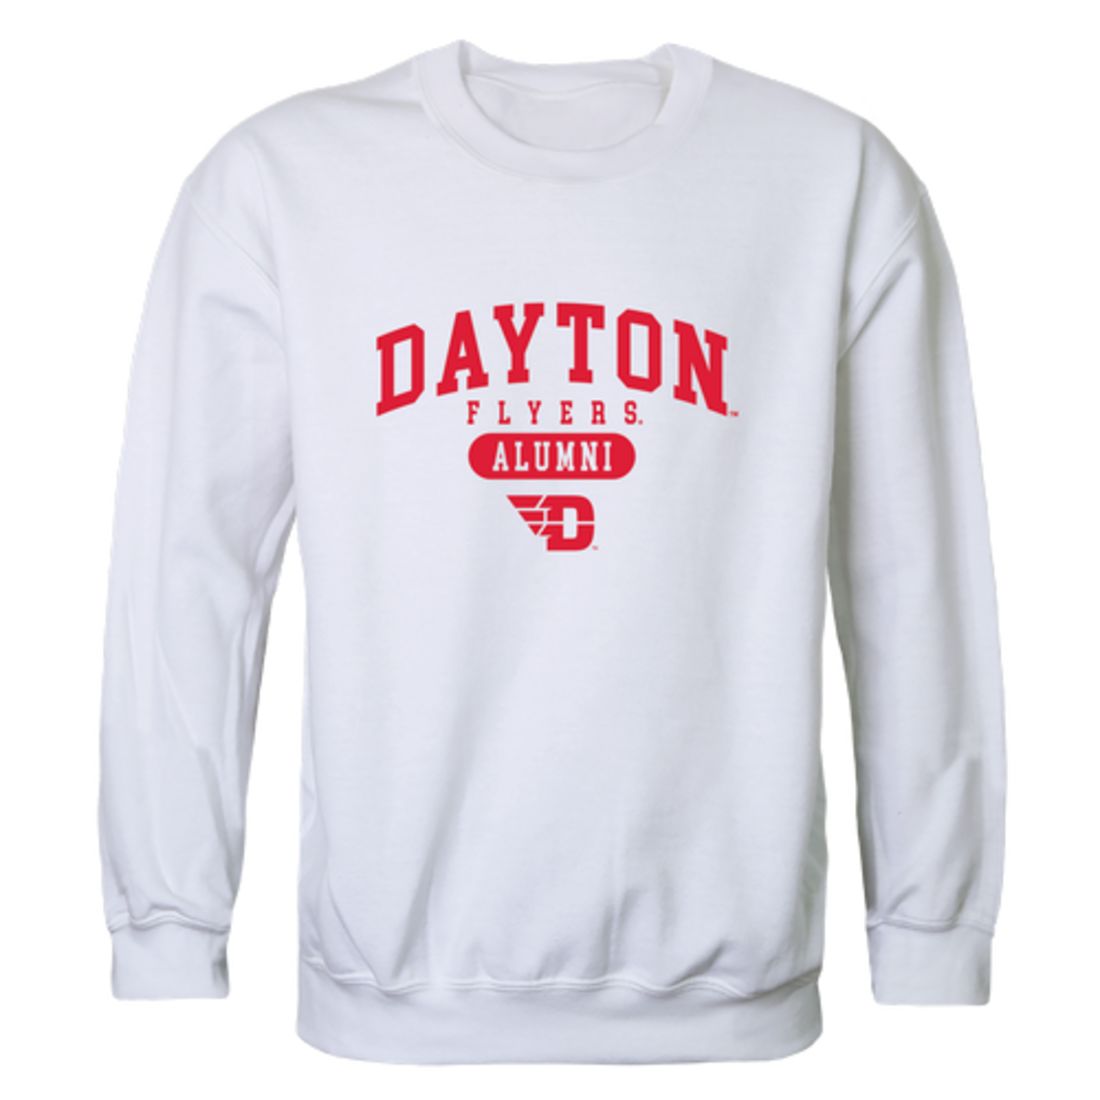 UD University of Dayton Flyers Alumni Fleece Crewneck Pullover Sweatshirt Heather Gray-Campus-Wardrobe